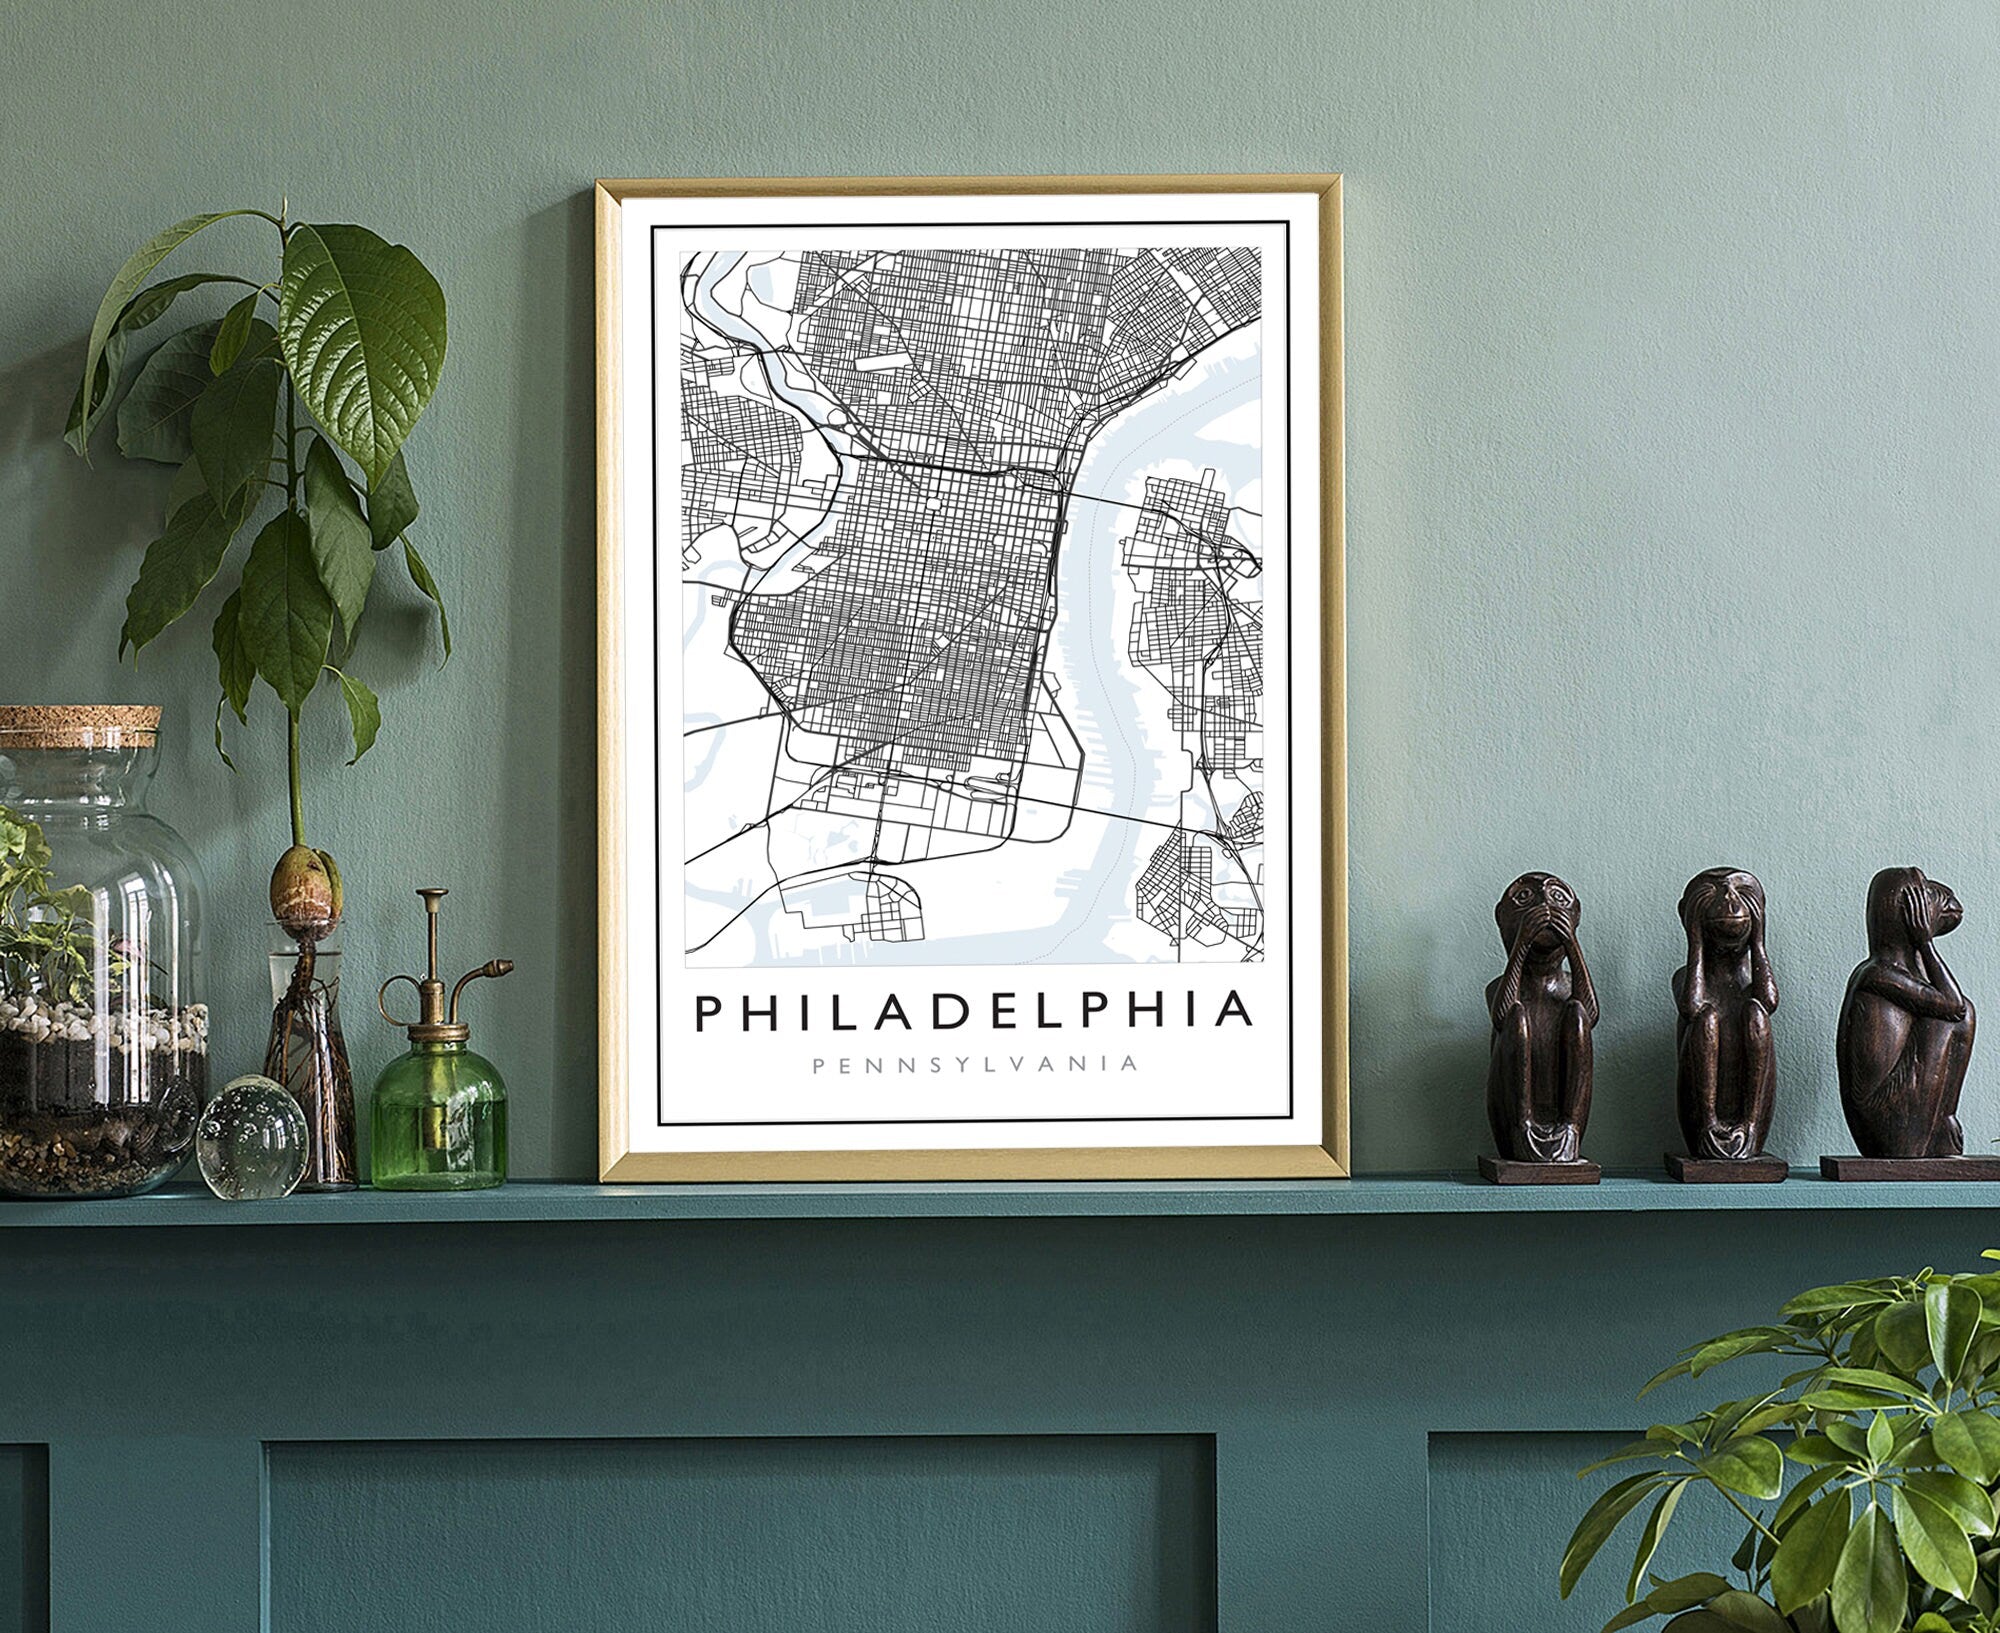 Philadelphia Pennsylvania City Map, Pennsylvania Road Map Poster, City Street Map Print, US City Modern City Map, Home Office Wall Art Decor